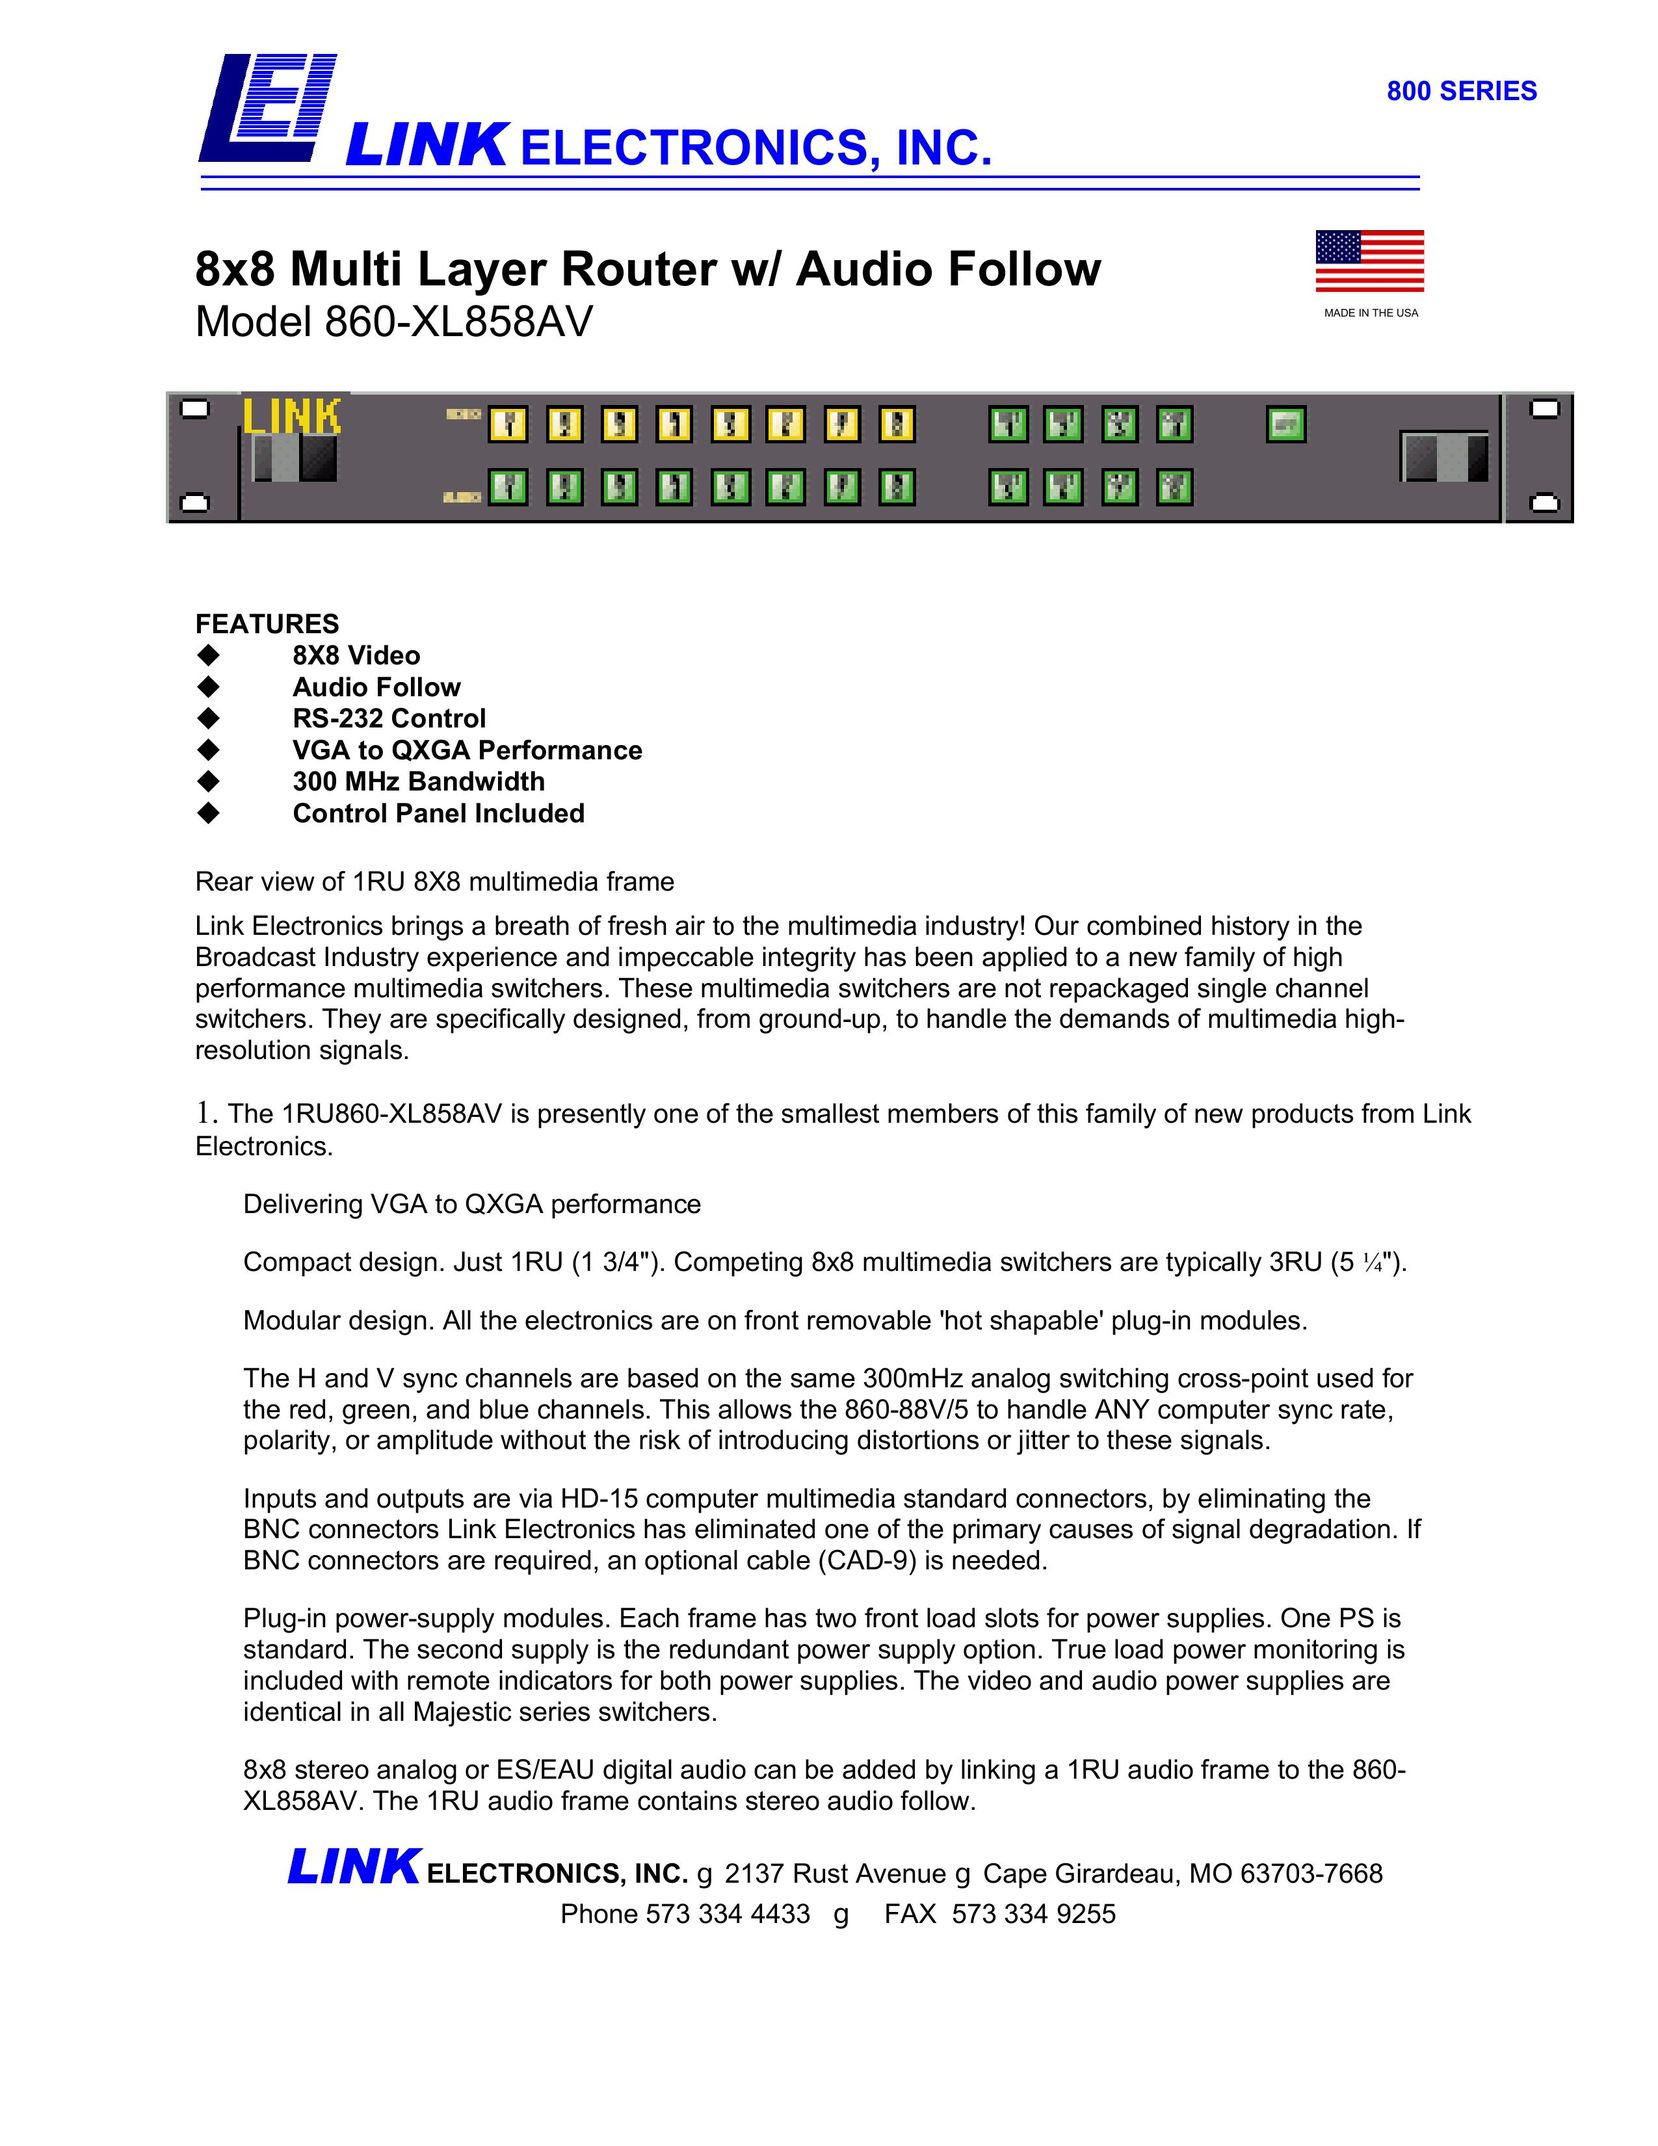 Link electronic 860-XL858AV Network Router User Manual